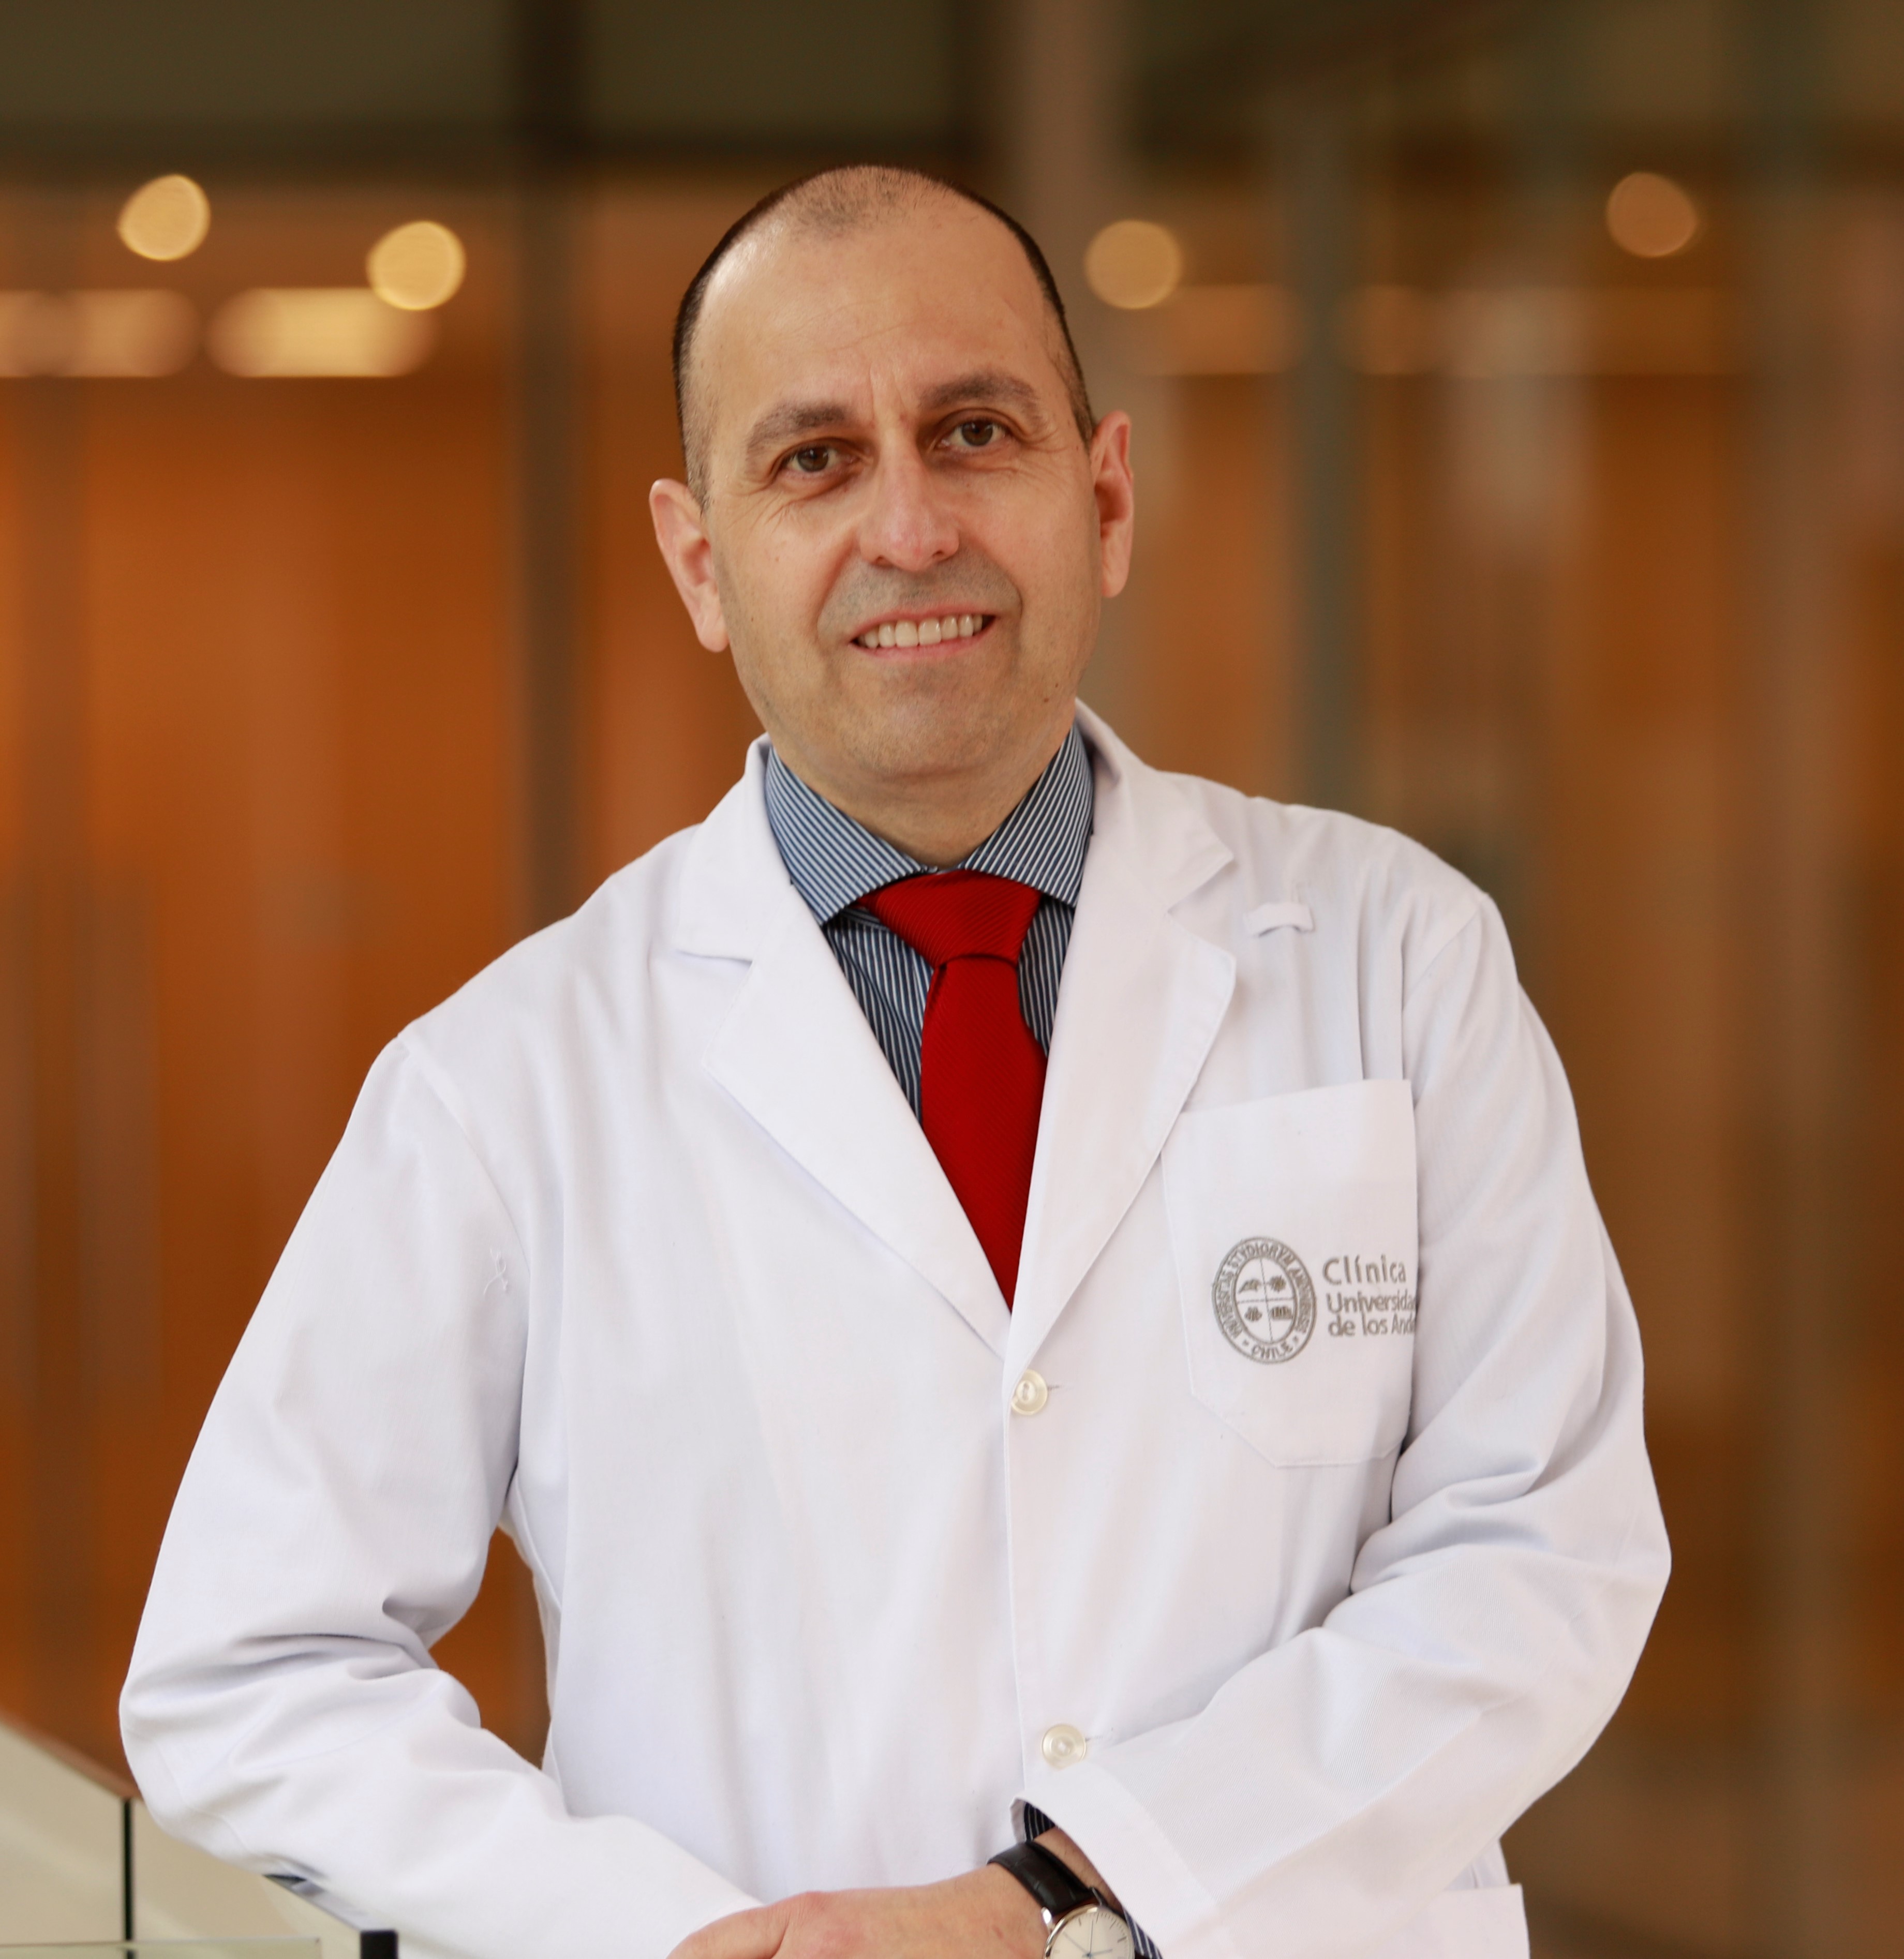 Dr. Guillermo Concha